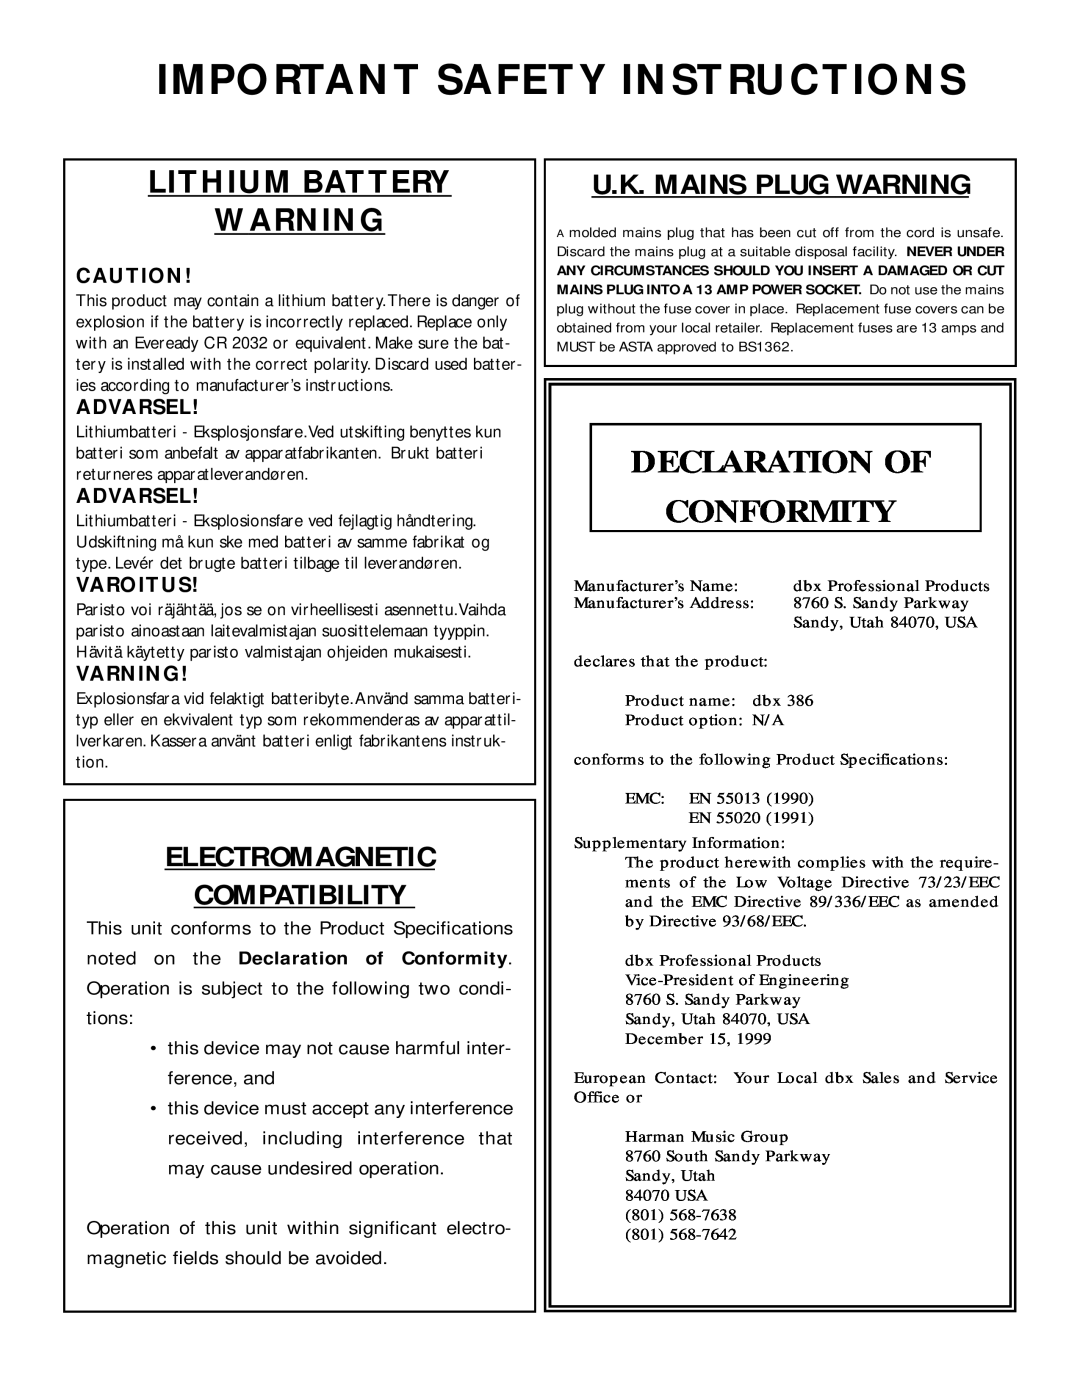 dbx Pro 386 Lithium Battery, Electromagnetic Compatibility, U.K. Mains Plug Warning, Advarsel, Varoitus, Varning 